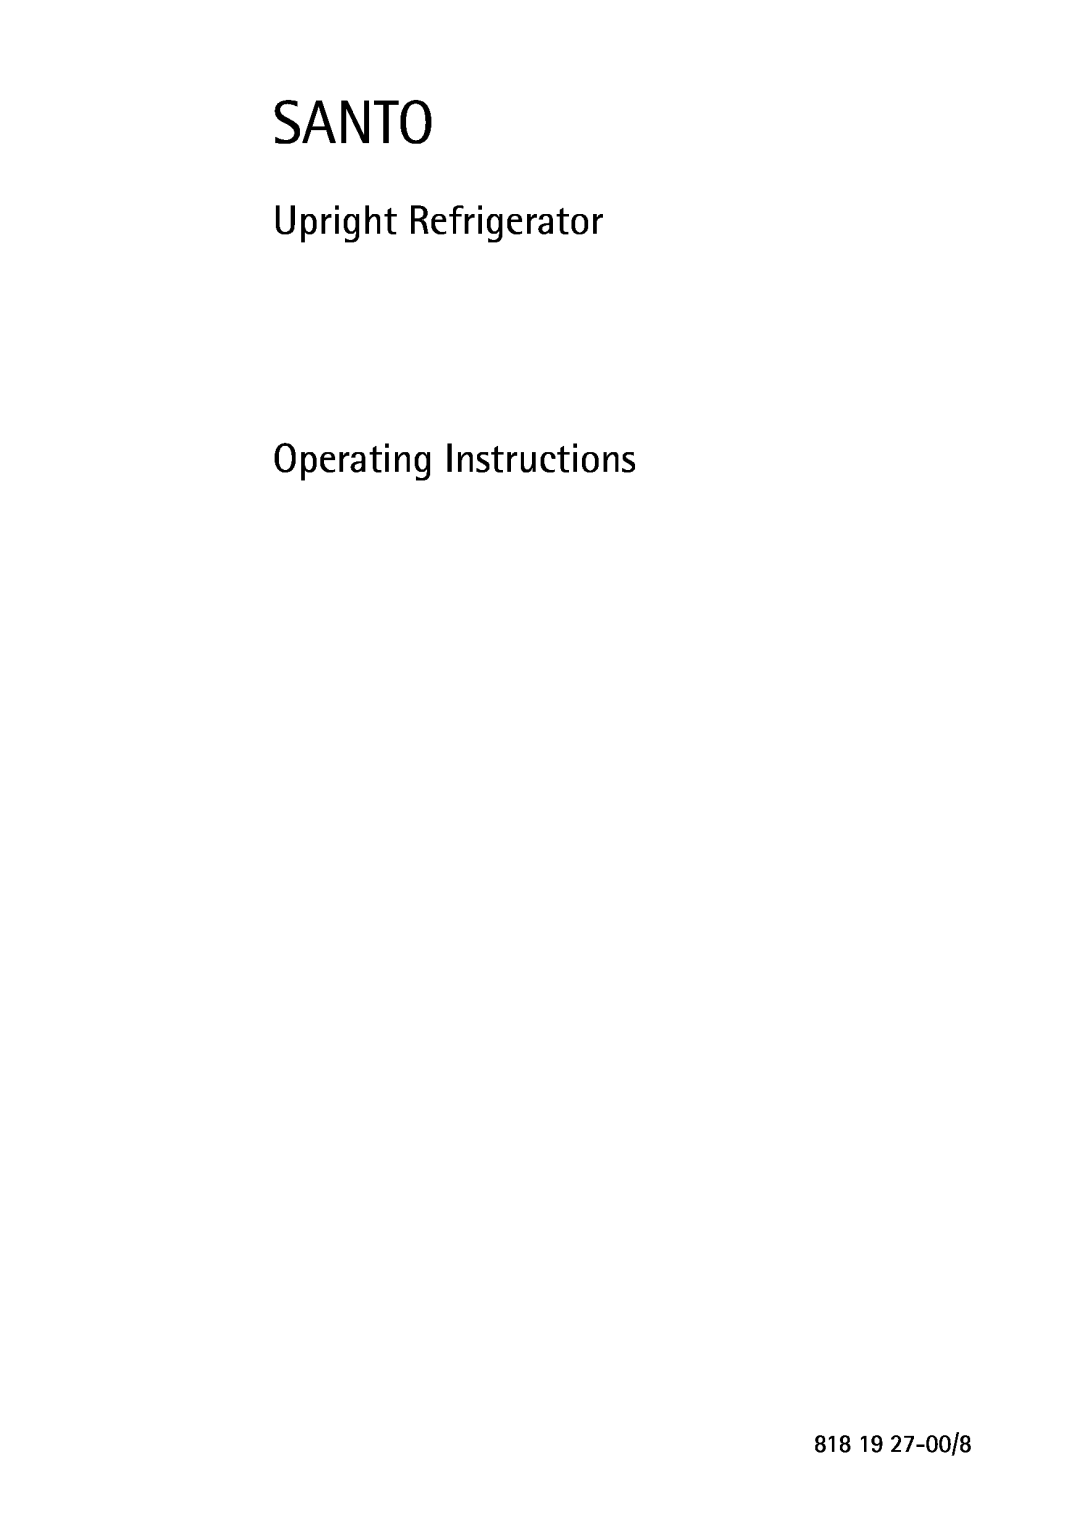 Electrolux manual Santo, Upright Refrigerator Operating Instructions 